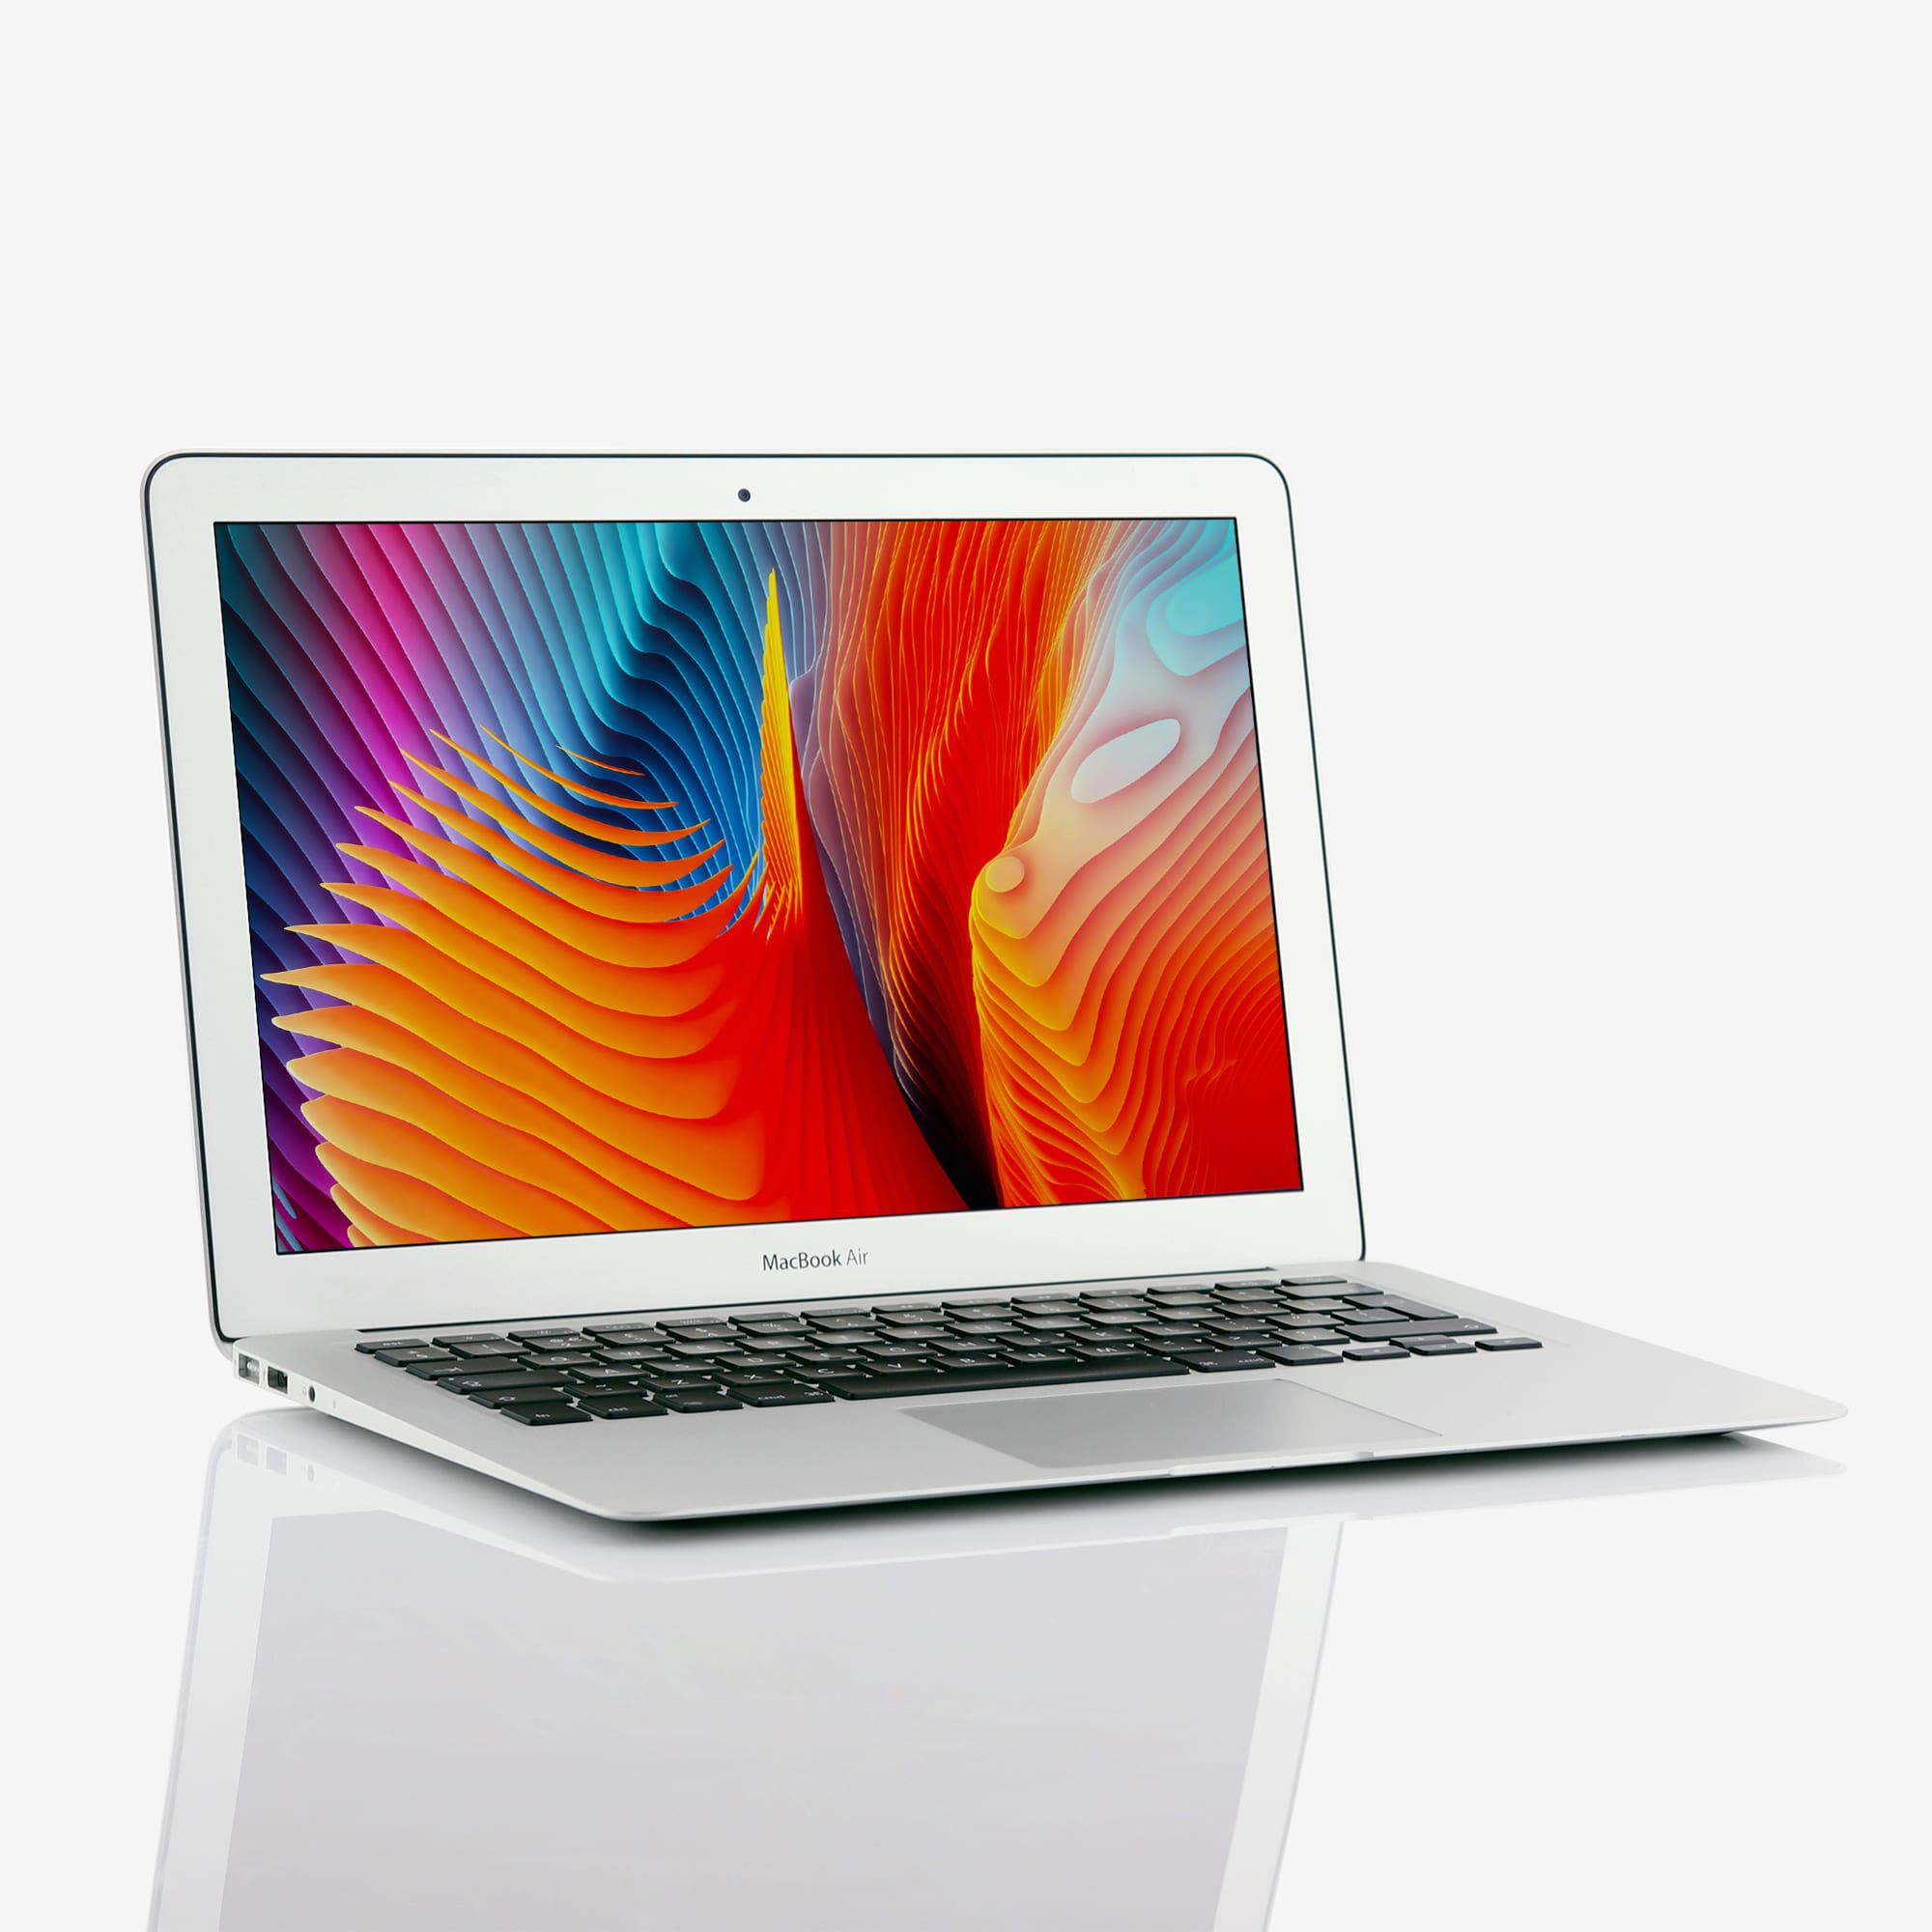 1 x Apple MacBook Air 13 Inch Intel Core i5 1.80 GHz (2017)